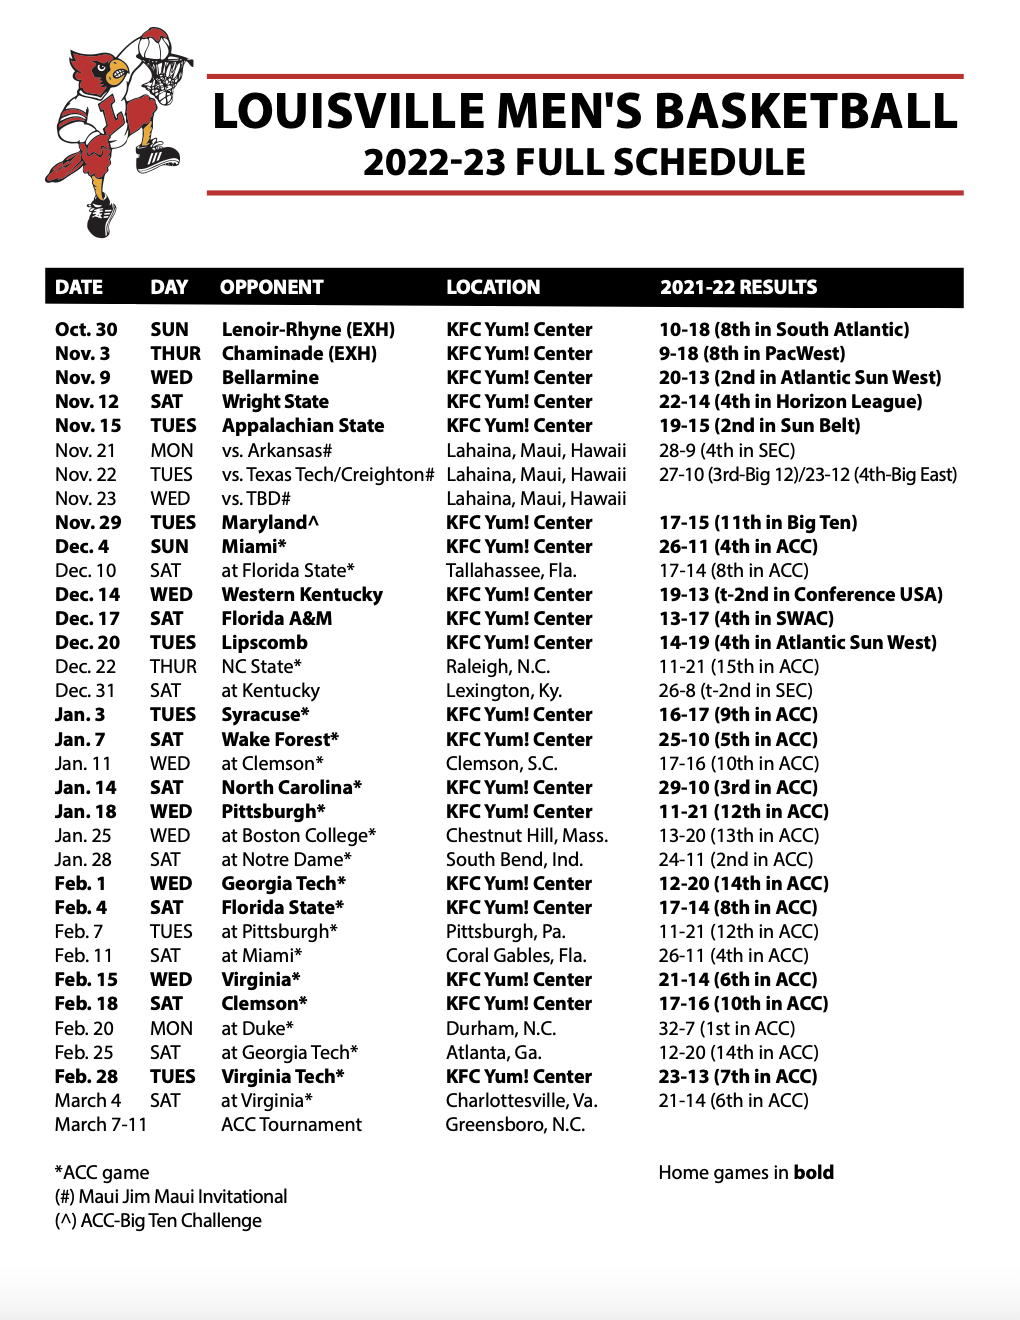 Louisville Men's Basketball on X: Your 2022-23 Louisville Men's